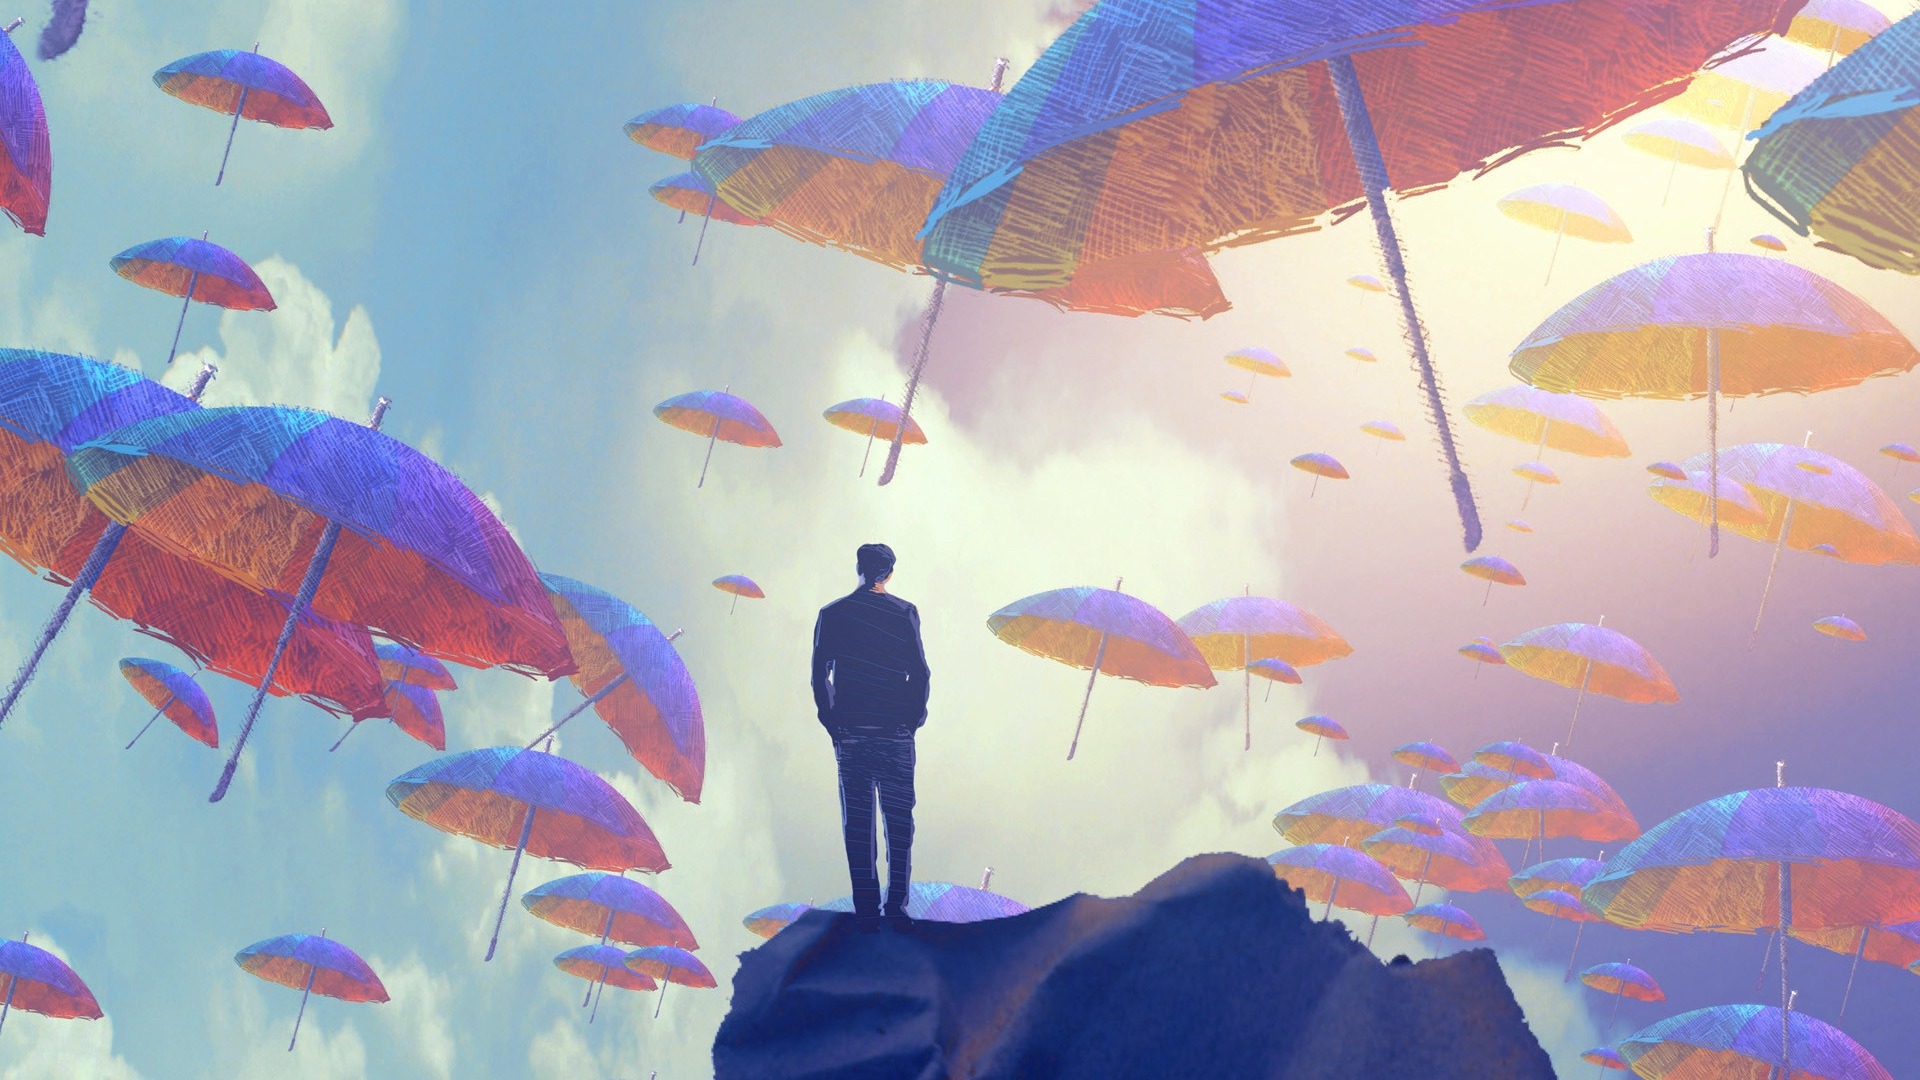 Standing among a sea of umbrellas by Jakub Grygier